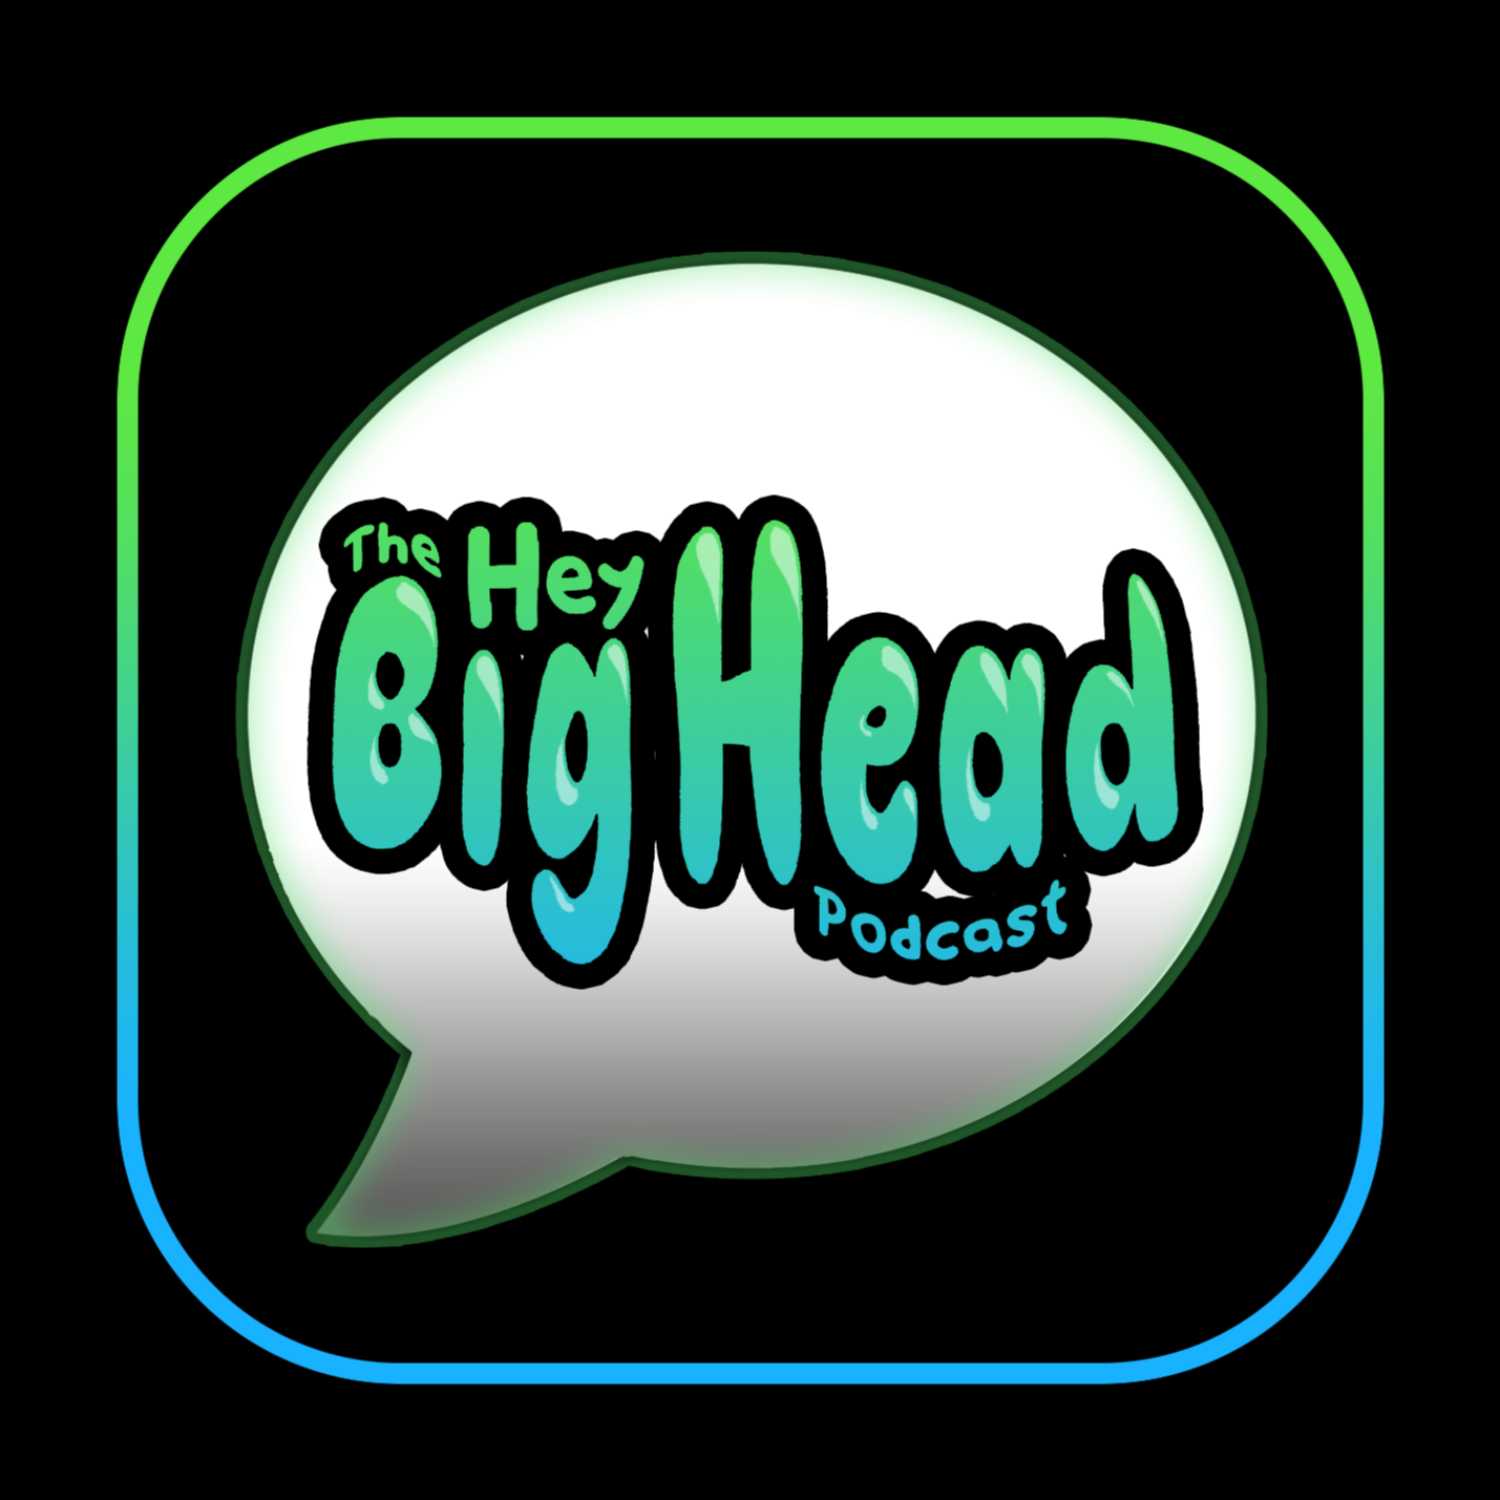 The Hey Big Head Podcast